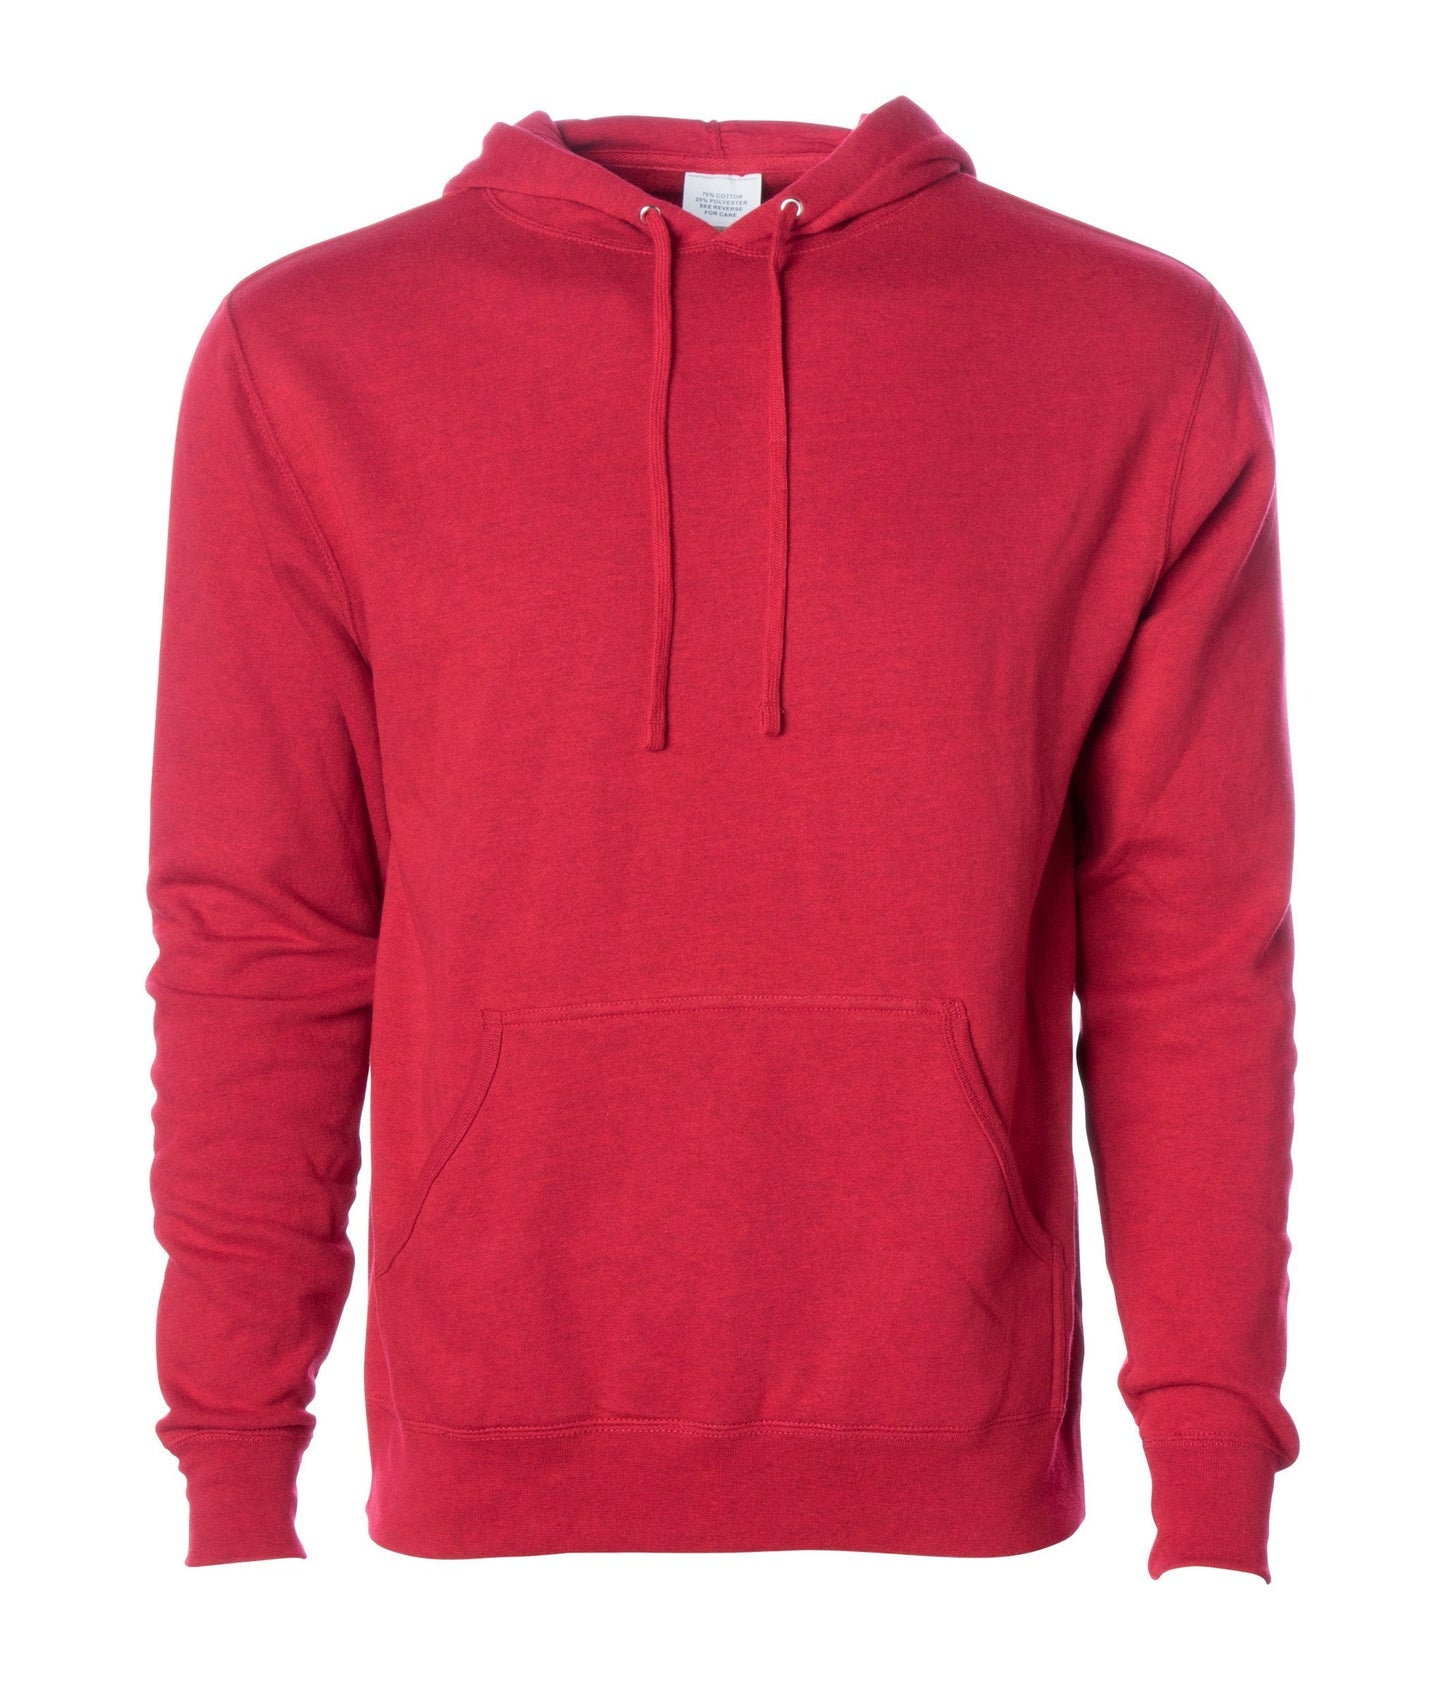 AFX4000 Lightweight Hooded Pullover Sweatshirt - Red